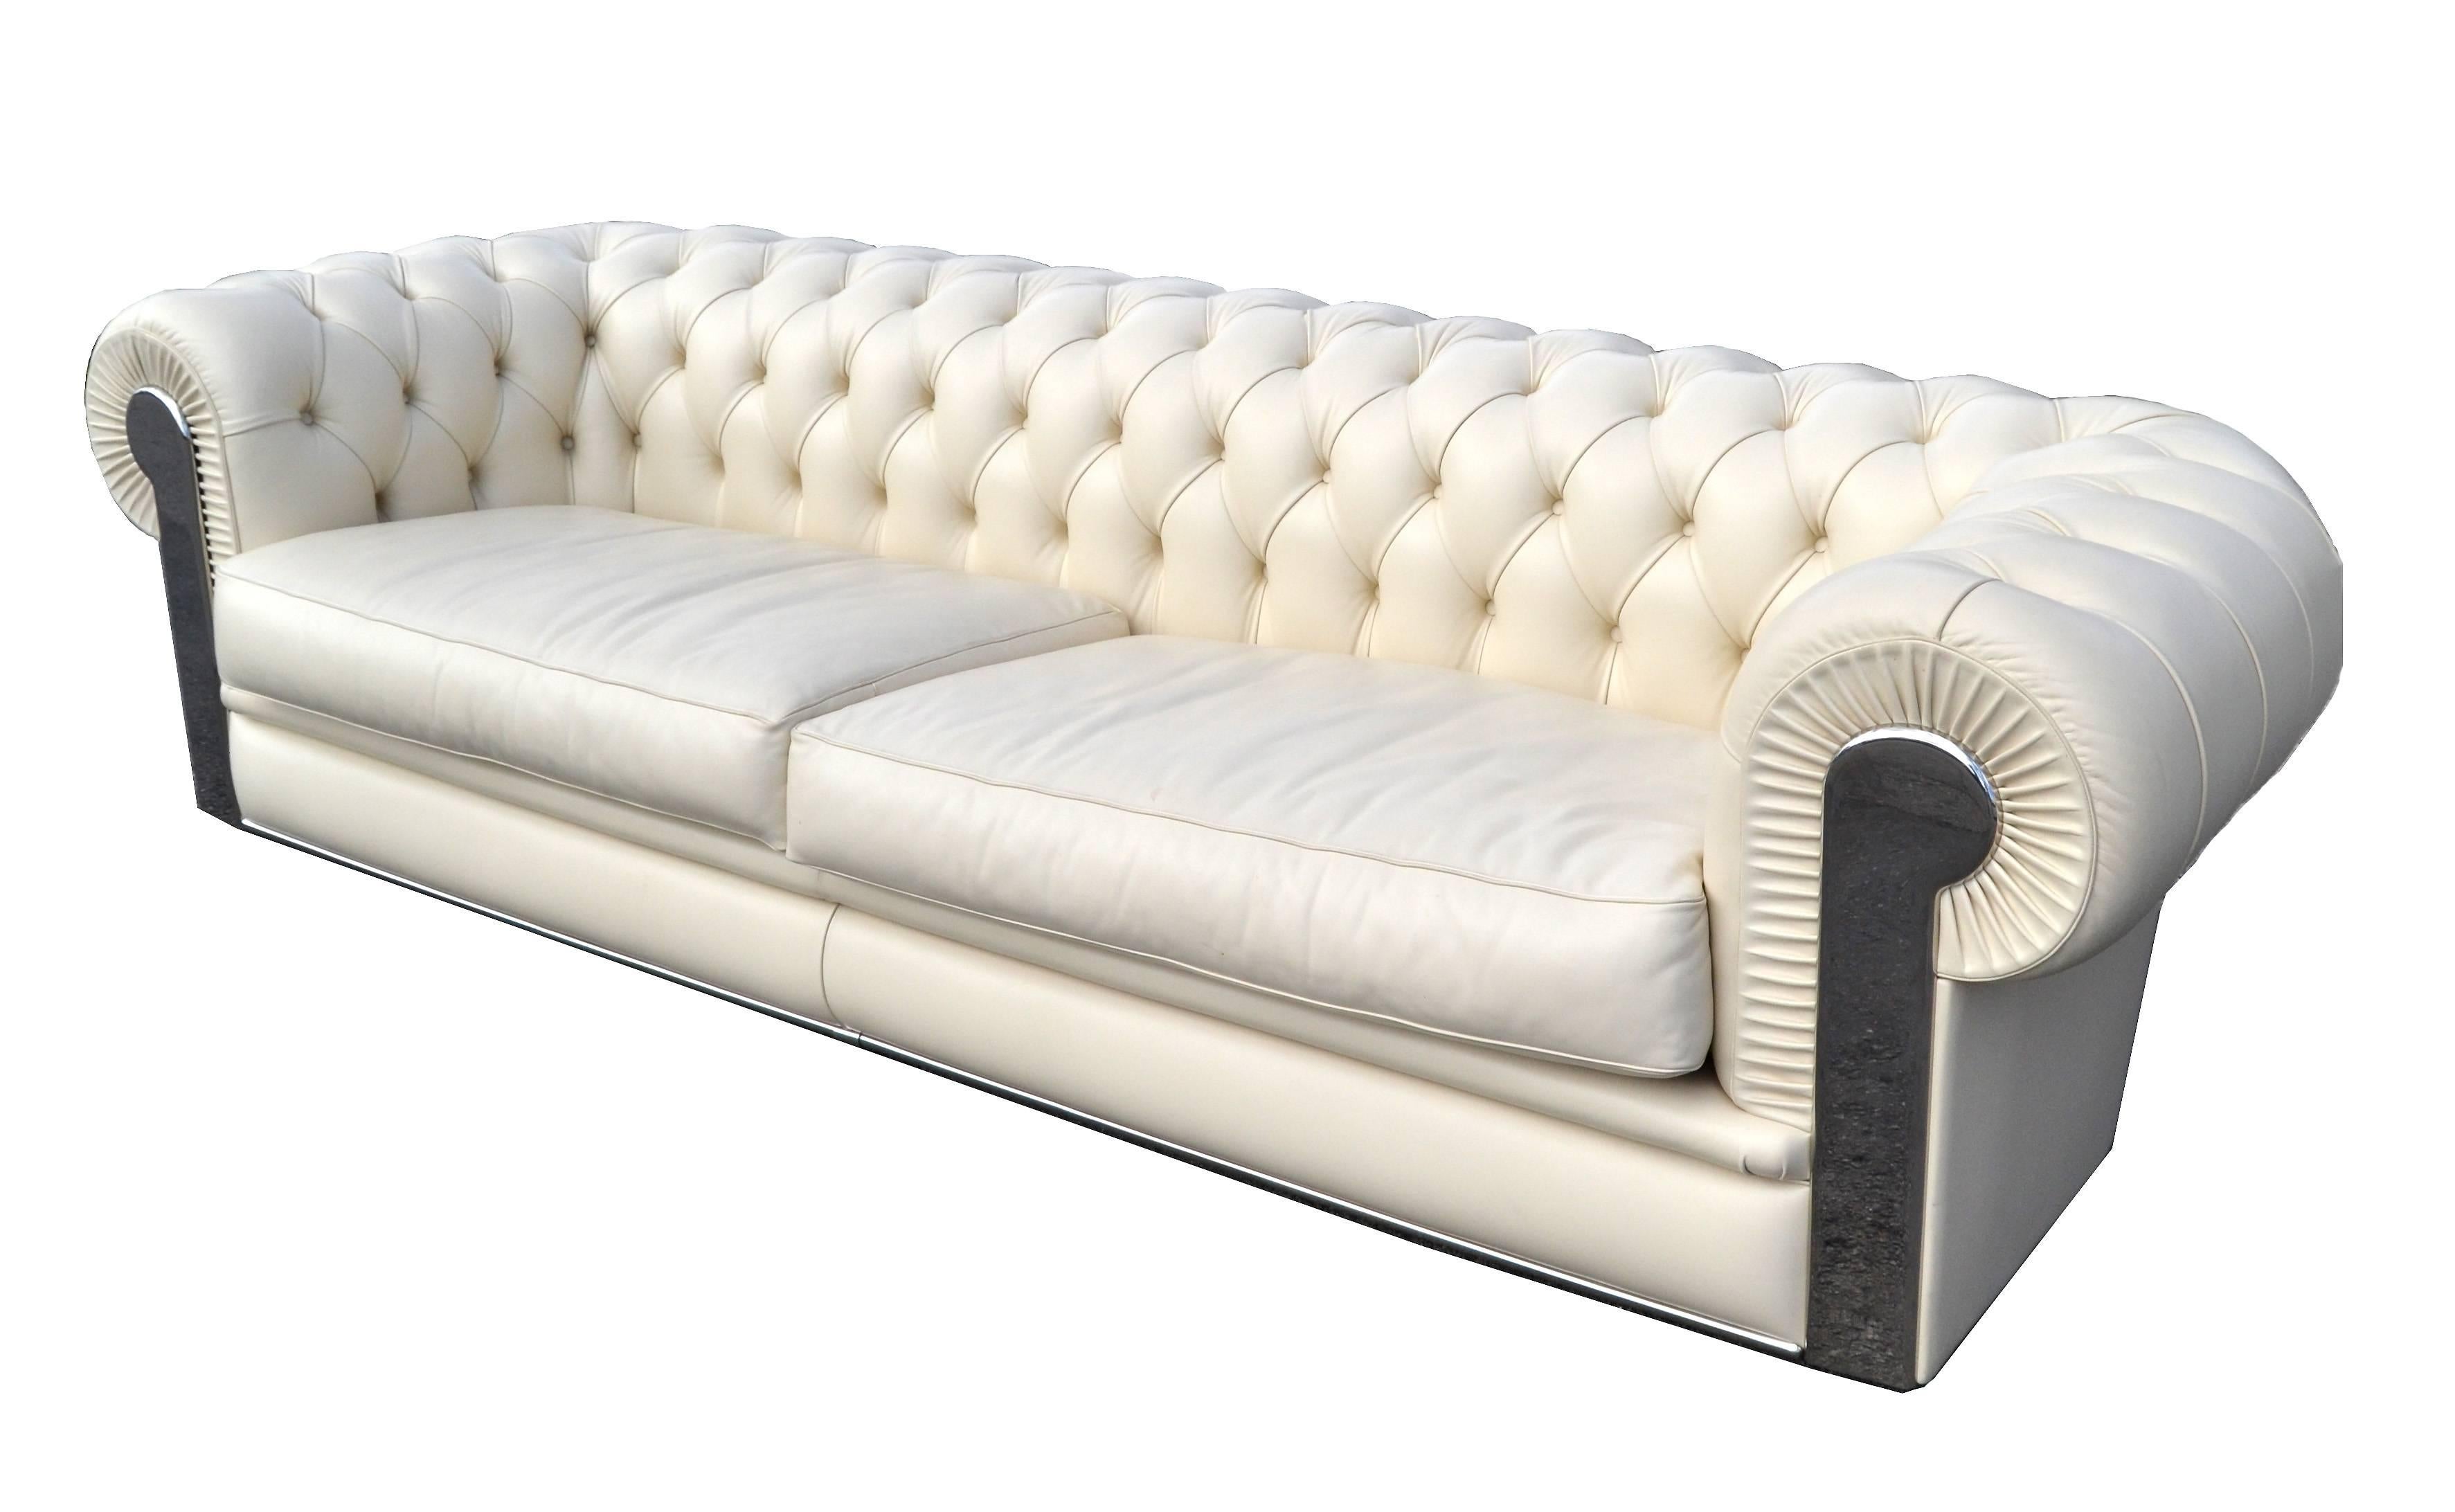 Fendi Casa Albino Tufted Leather Sofa in Chesterfield Style (Italienisch)